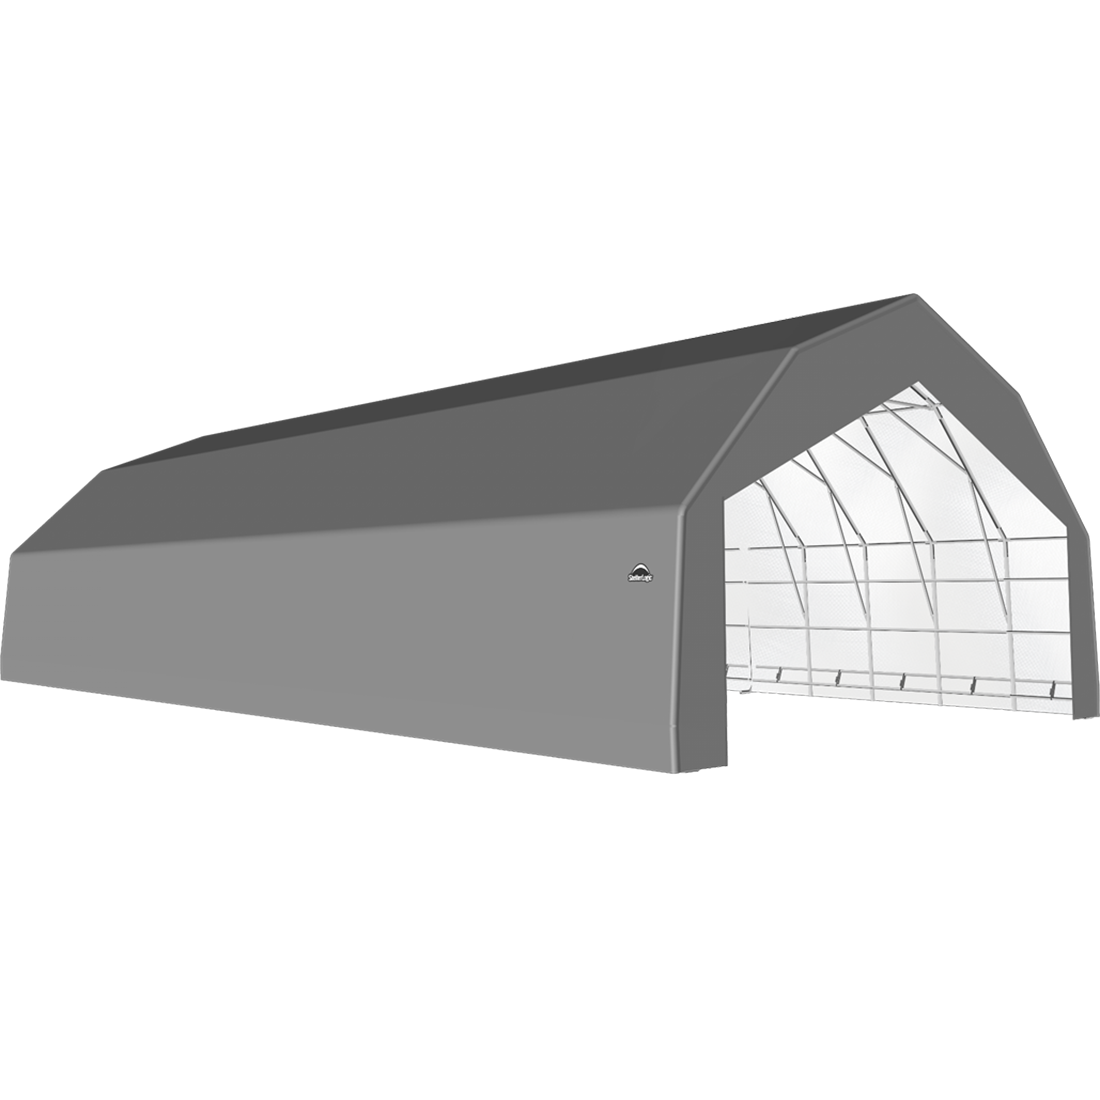 ShelterTech SP Series Barn Shelter, 30 ft. x 60 ft. x 18 ft. Heavy Duty PVC 14.5 oz. Gray